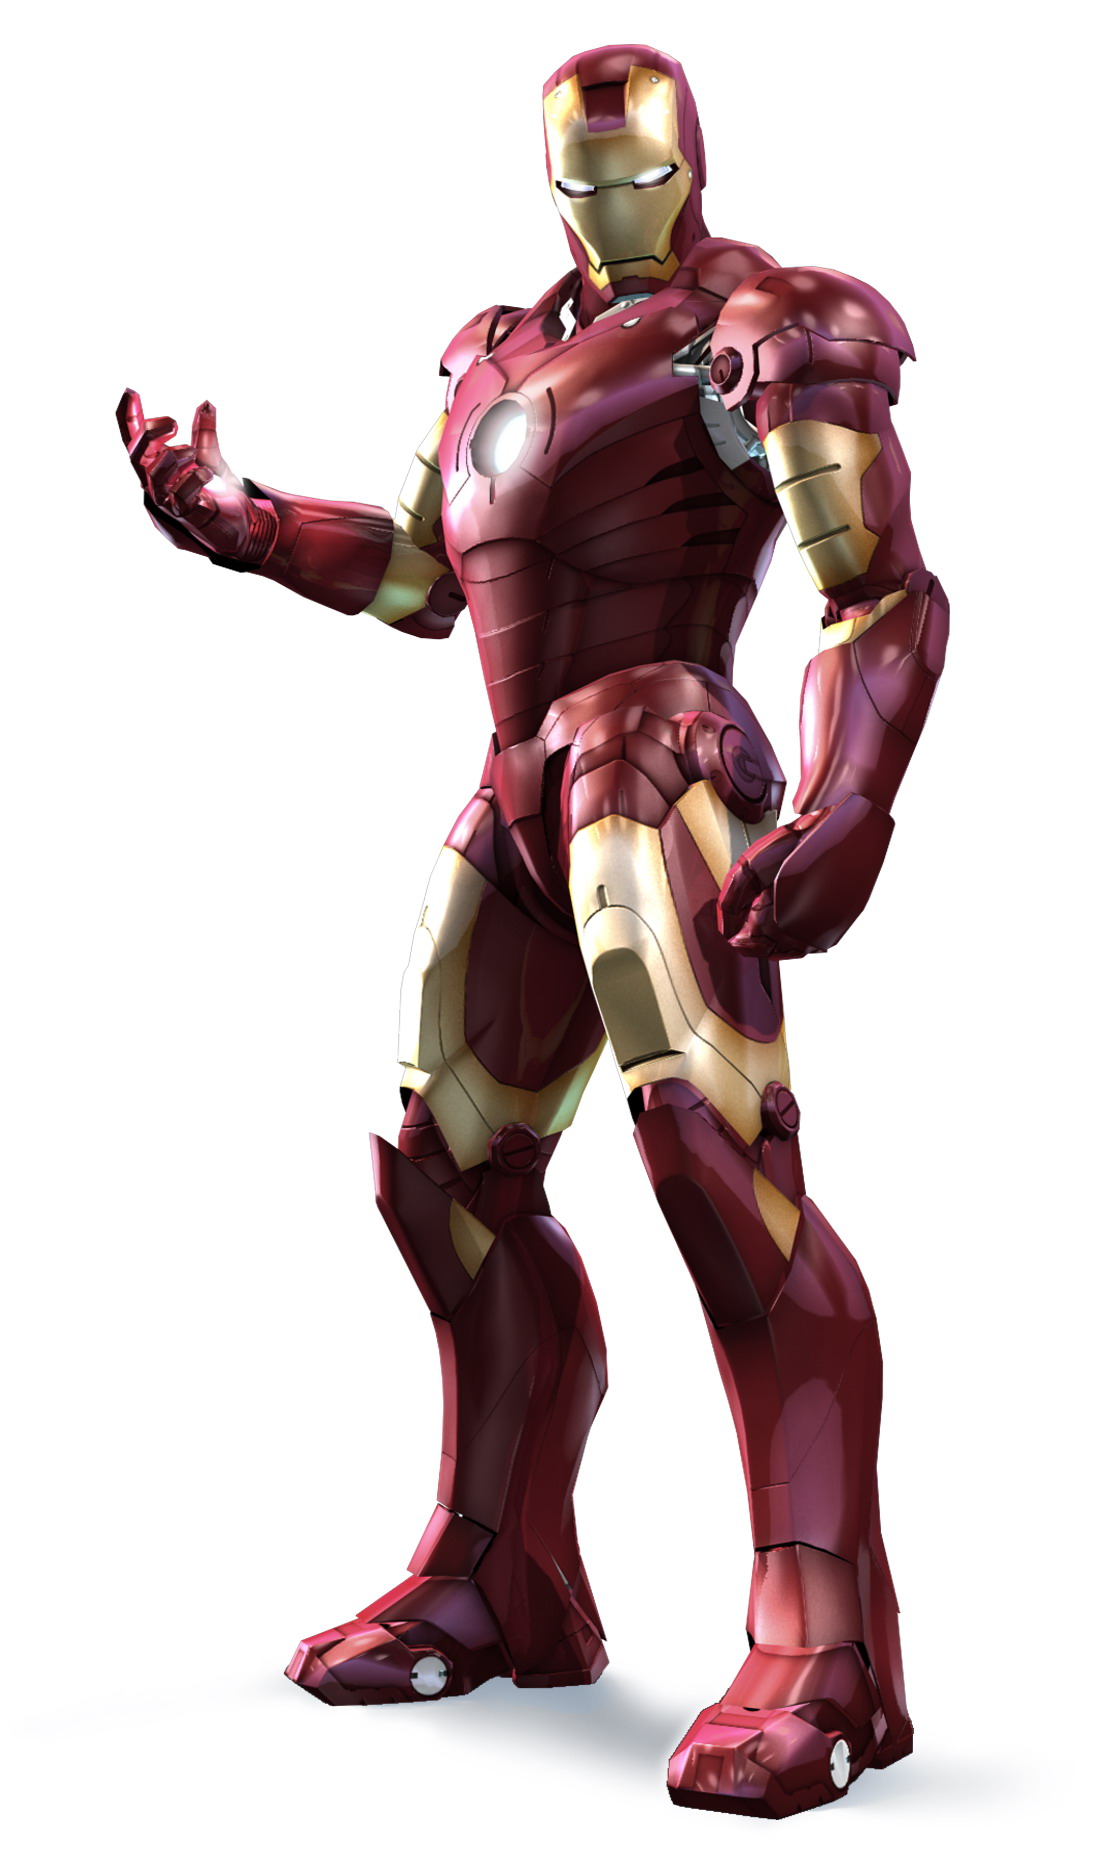 Iron Man Armors | The Avengers Movie Wiki | Fandom powered by Wikia